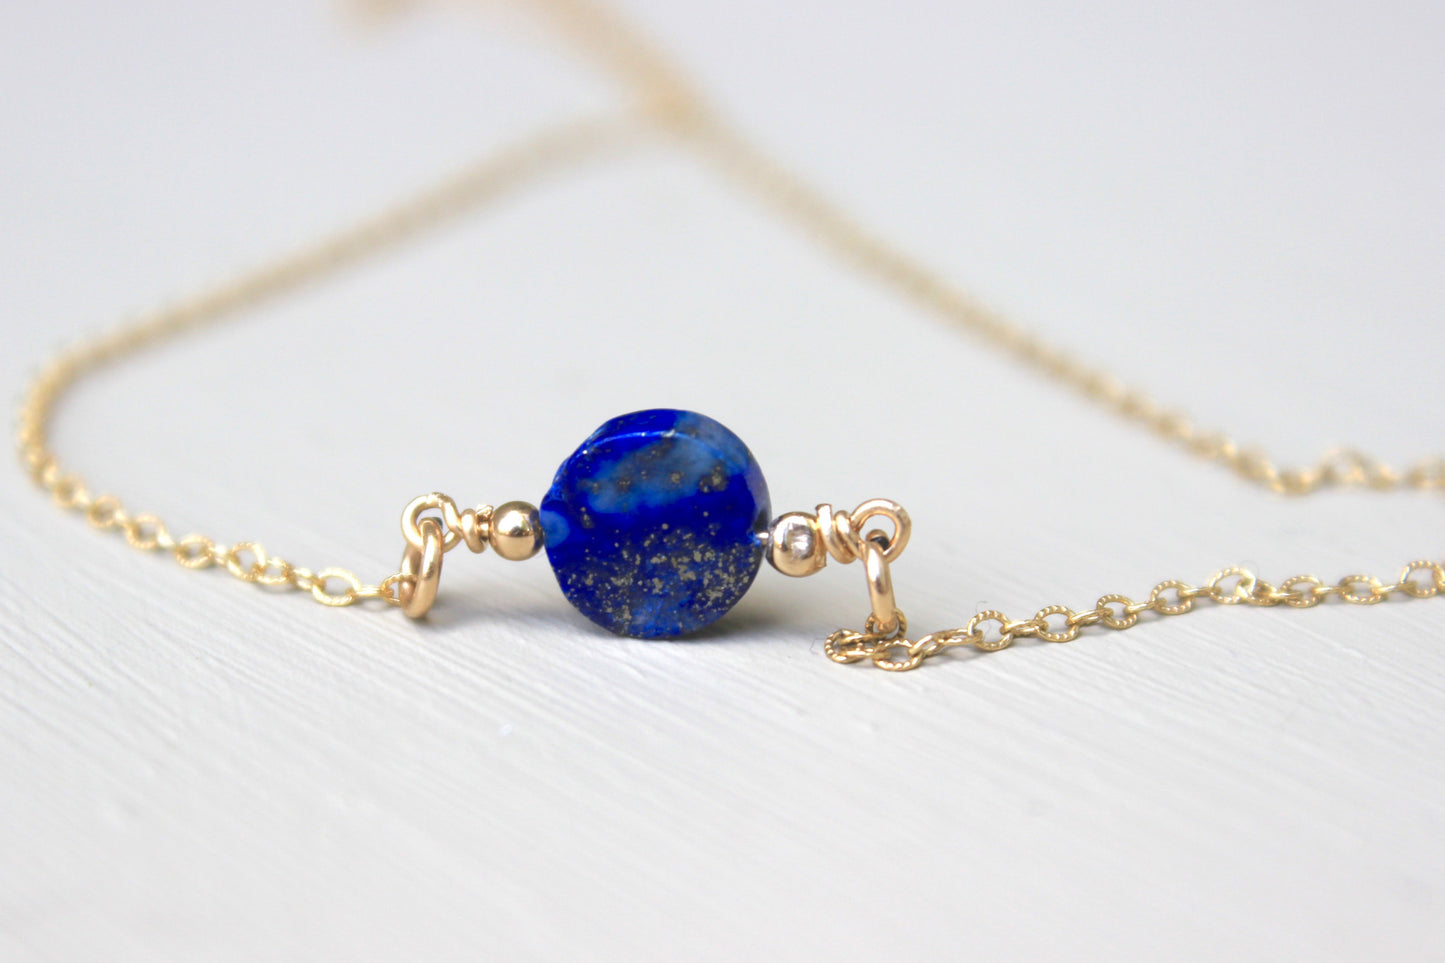 Lapis Lazuli Necklace - Designed By Lei